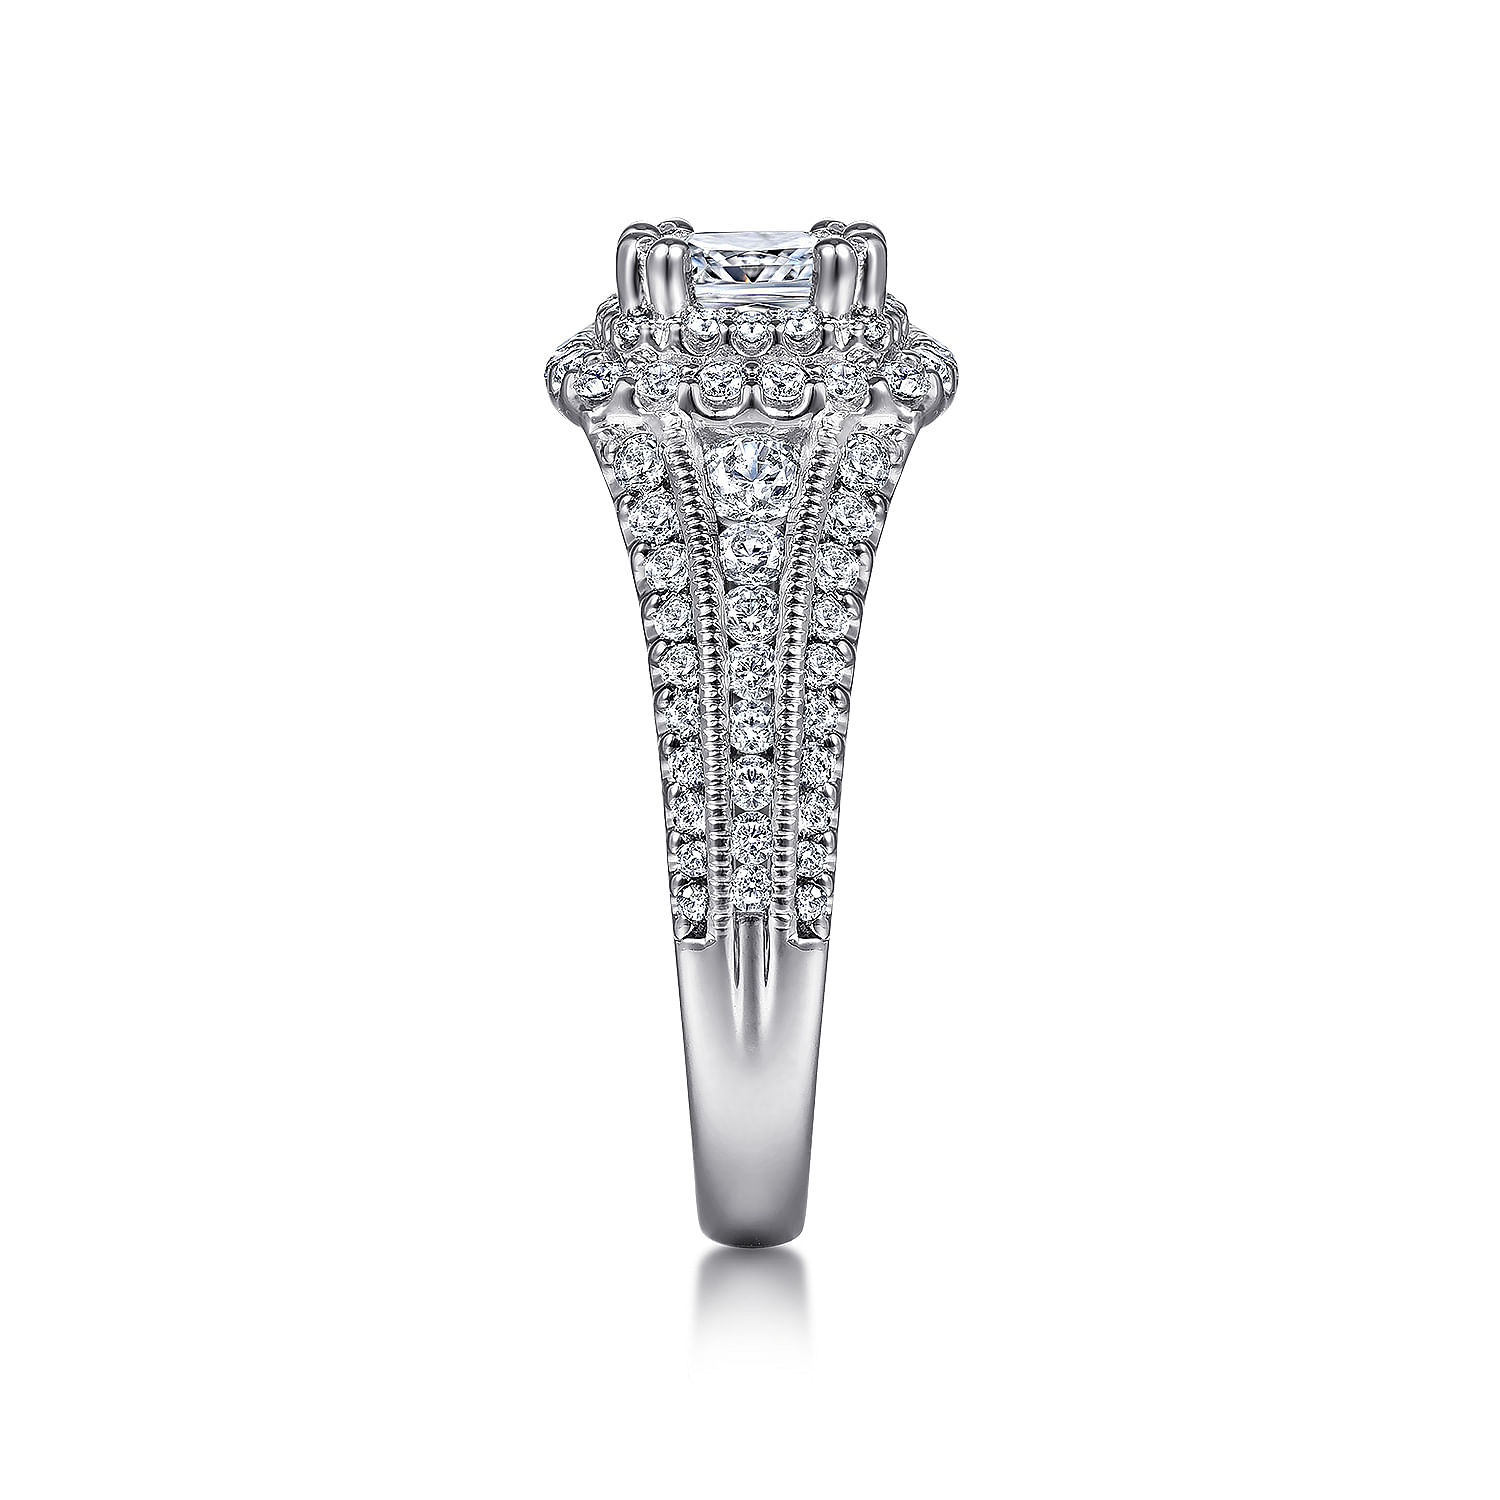 14K White Gold Cushion Cut Diamond Channel Set Engagement Ring